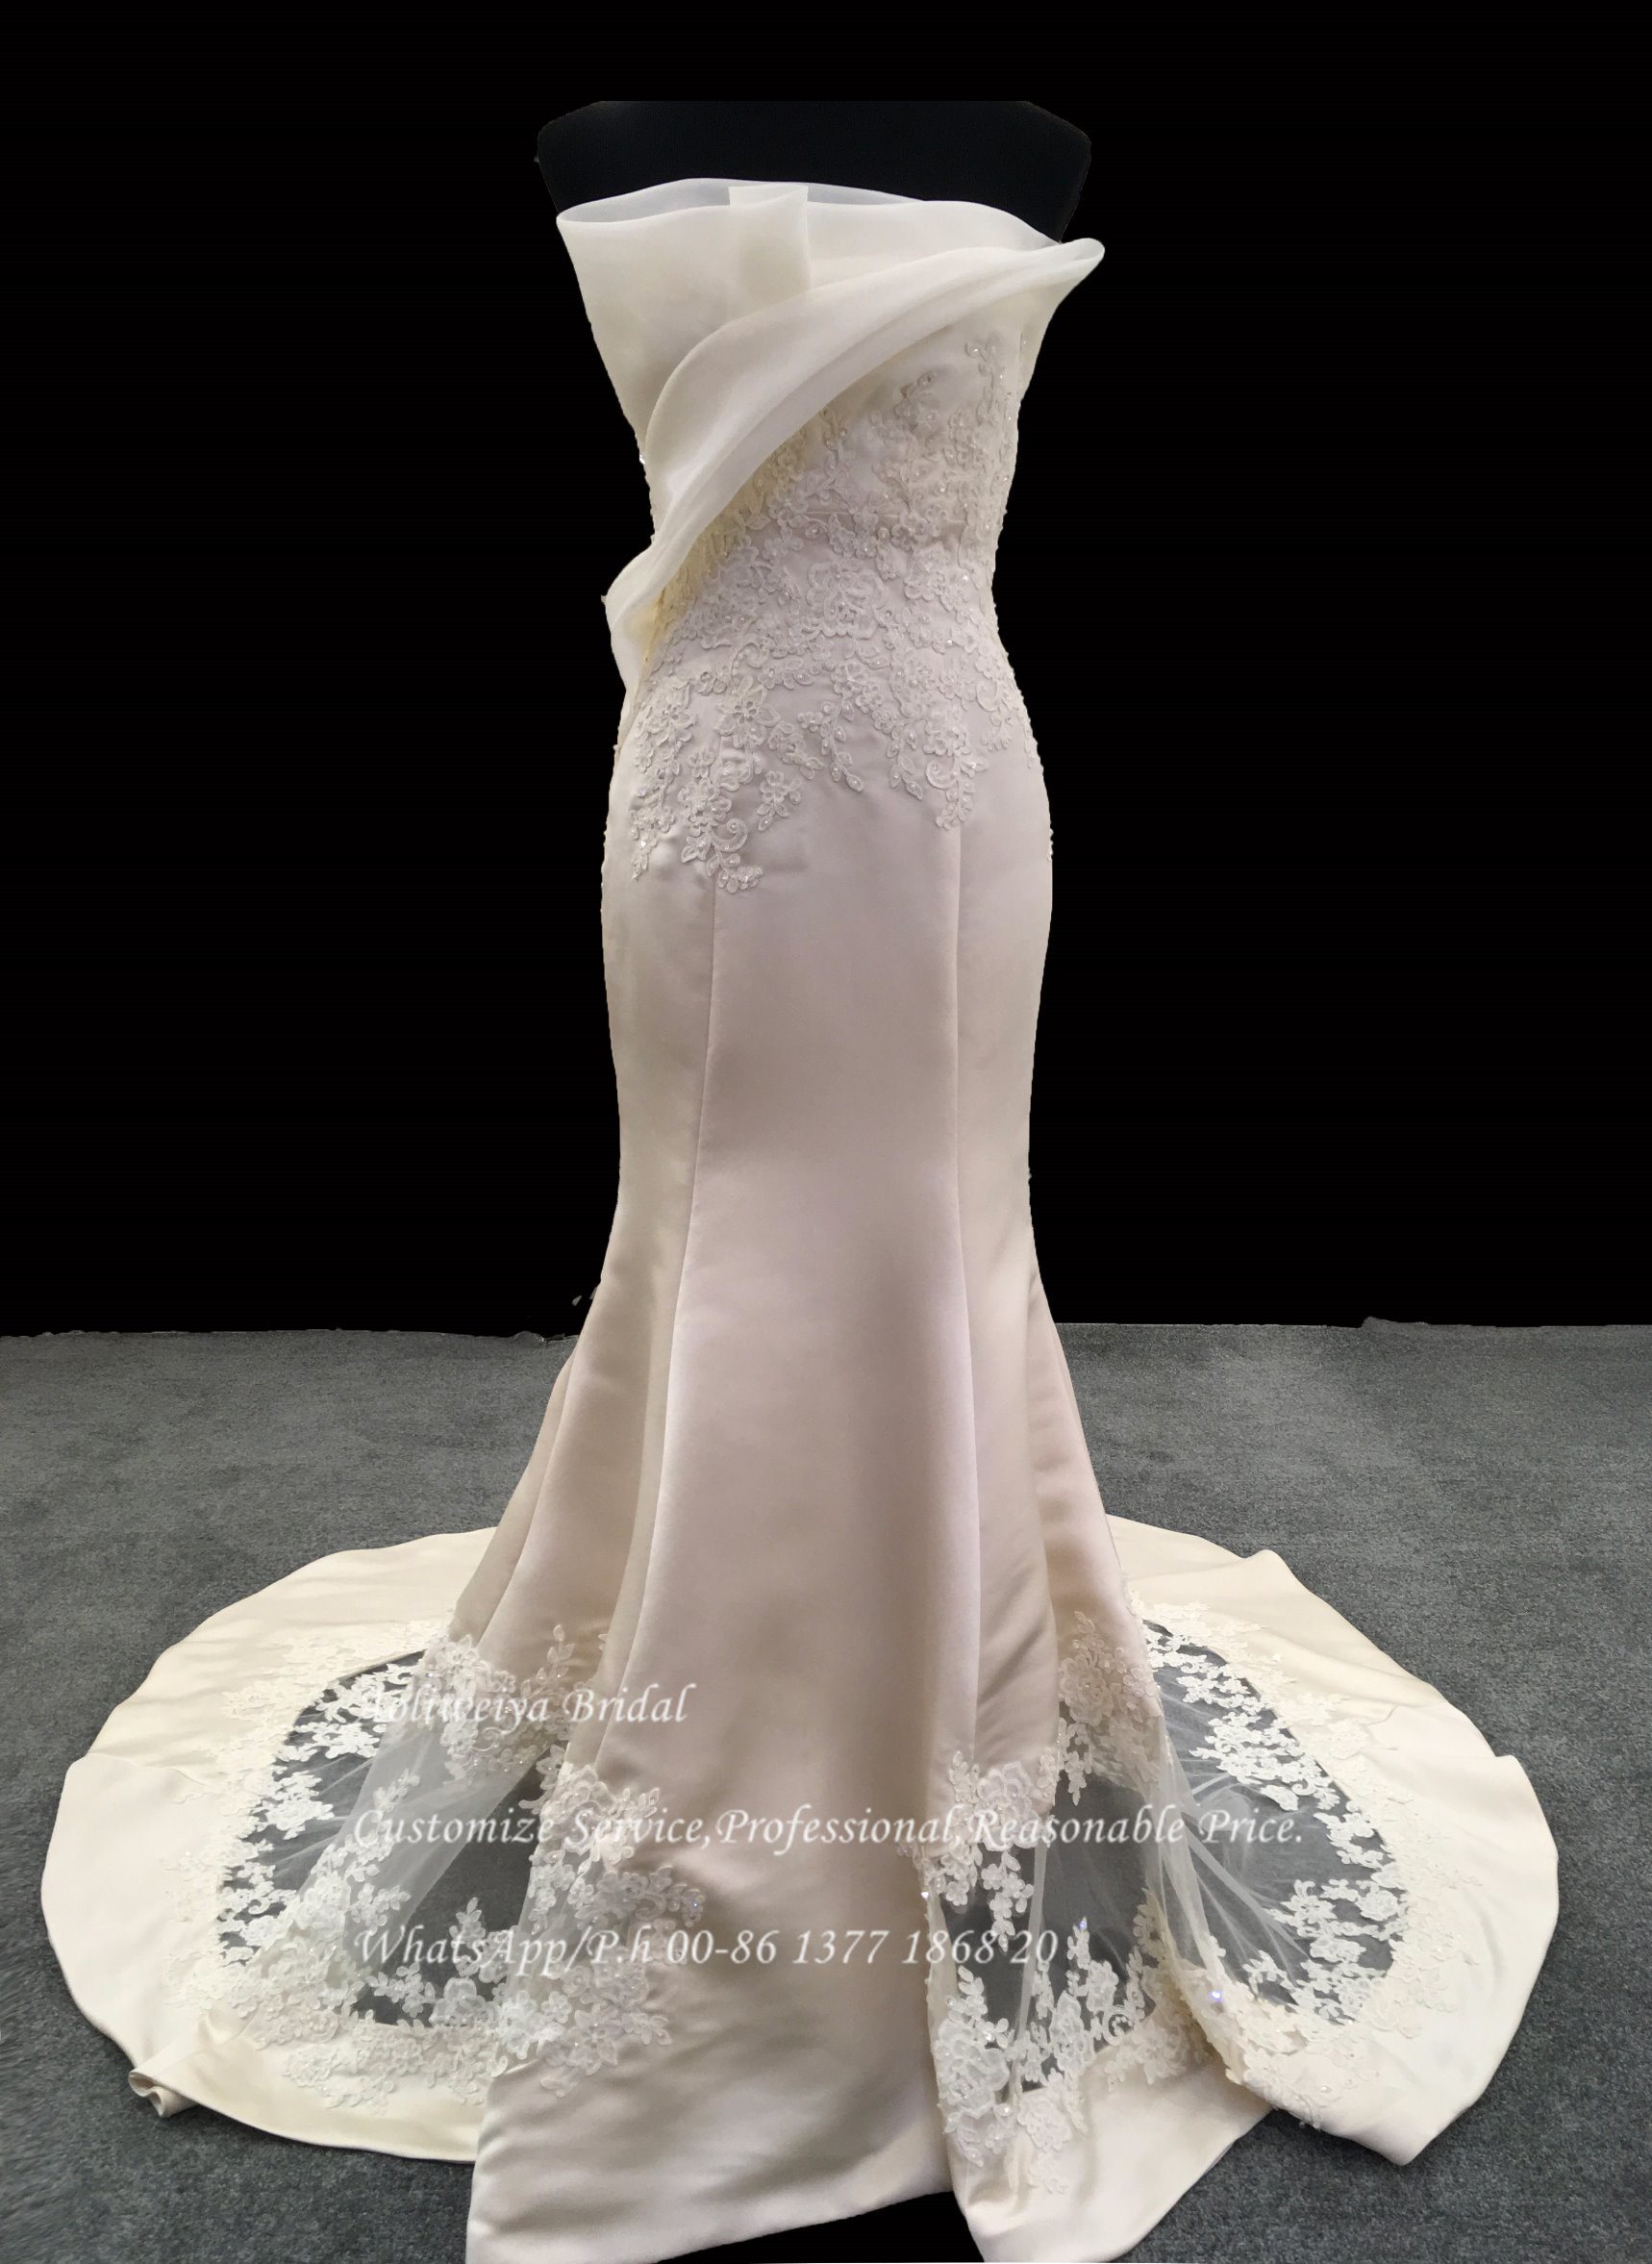 Aoliweiya Customize Size Satin and Lace Wedding Dress